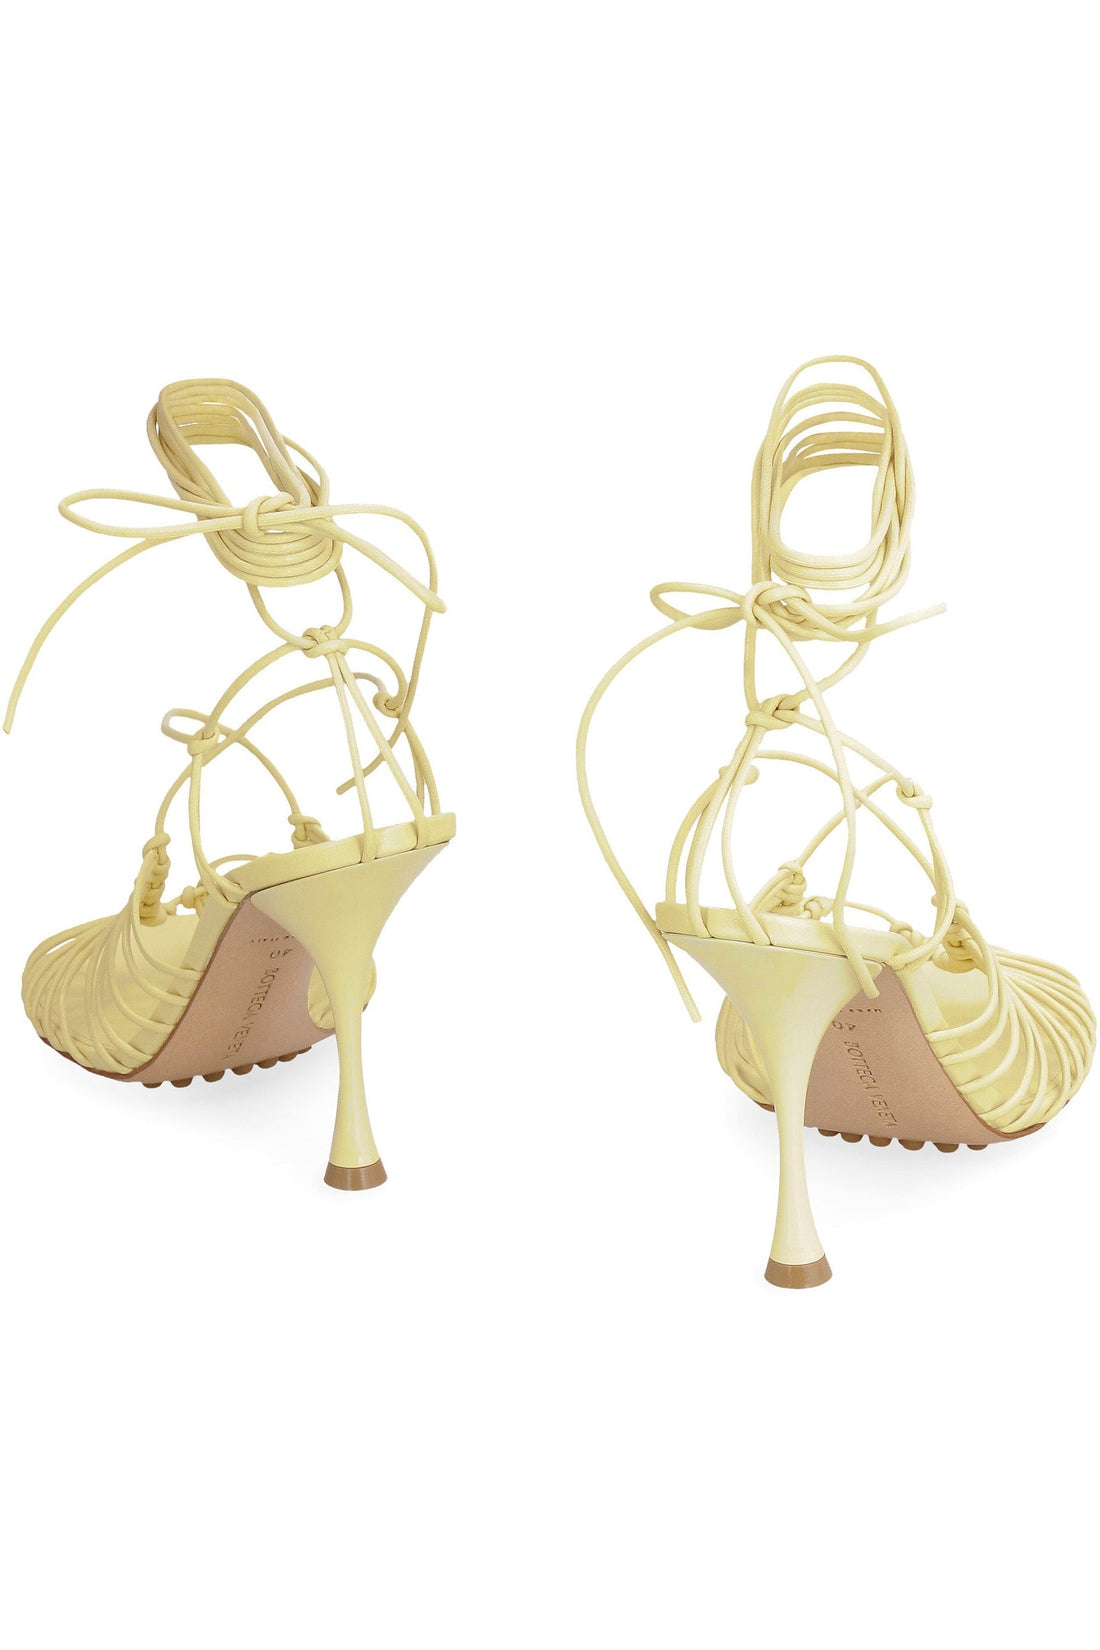 Bottega Veneta-OUTLET-SALE-Dot heeled sandals-ARCHIVIST